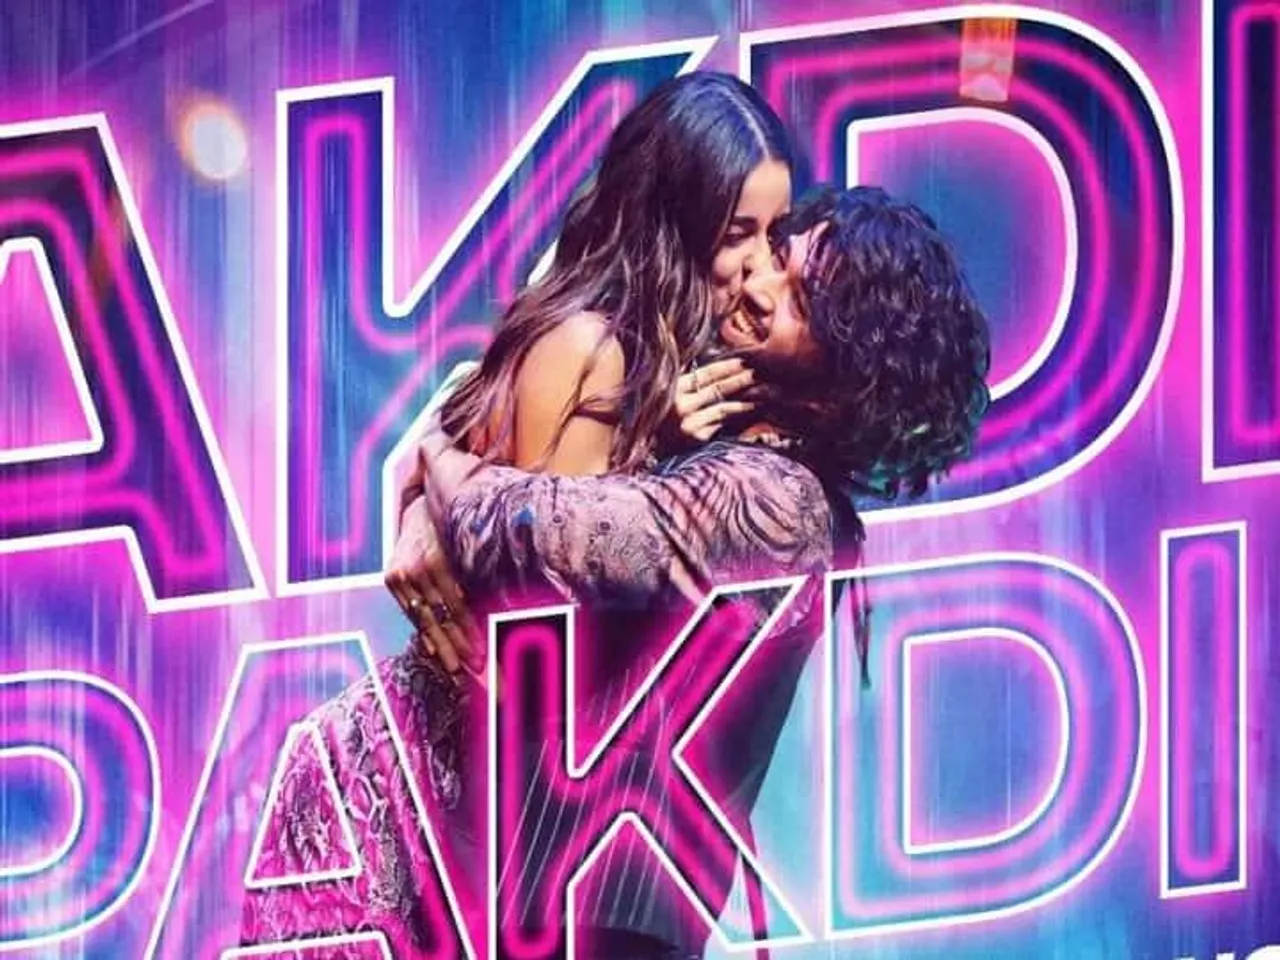 Akdi Pakdi to hit over 13 million views in 20 hours